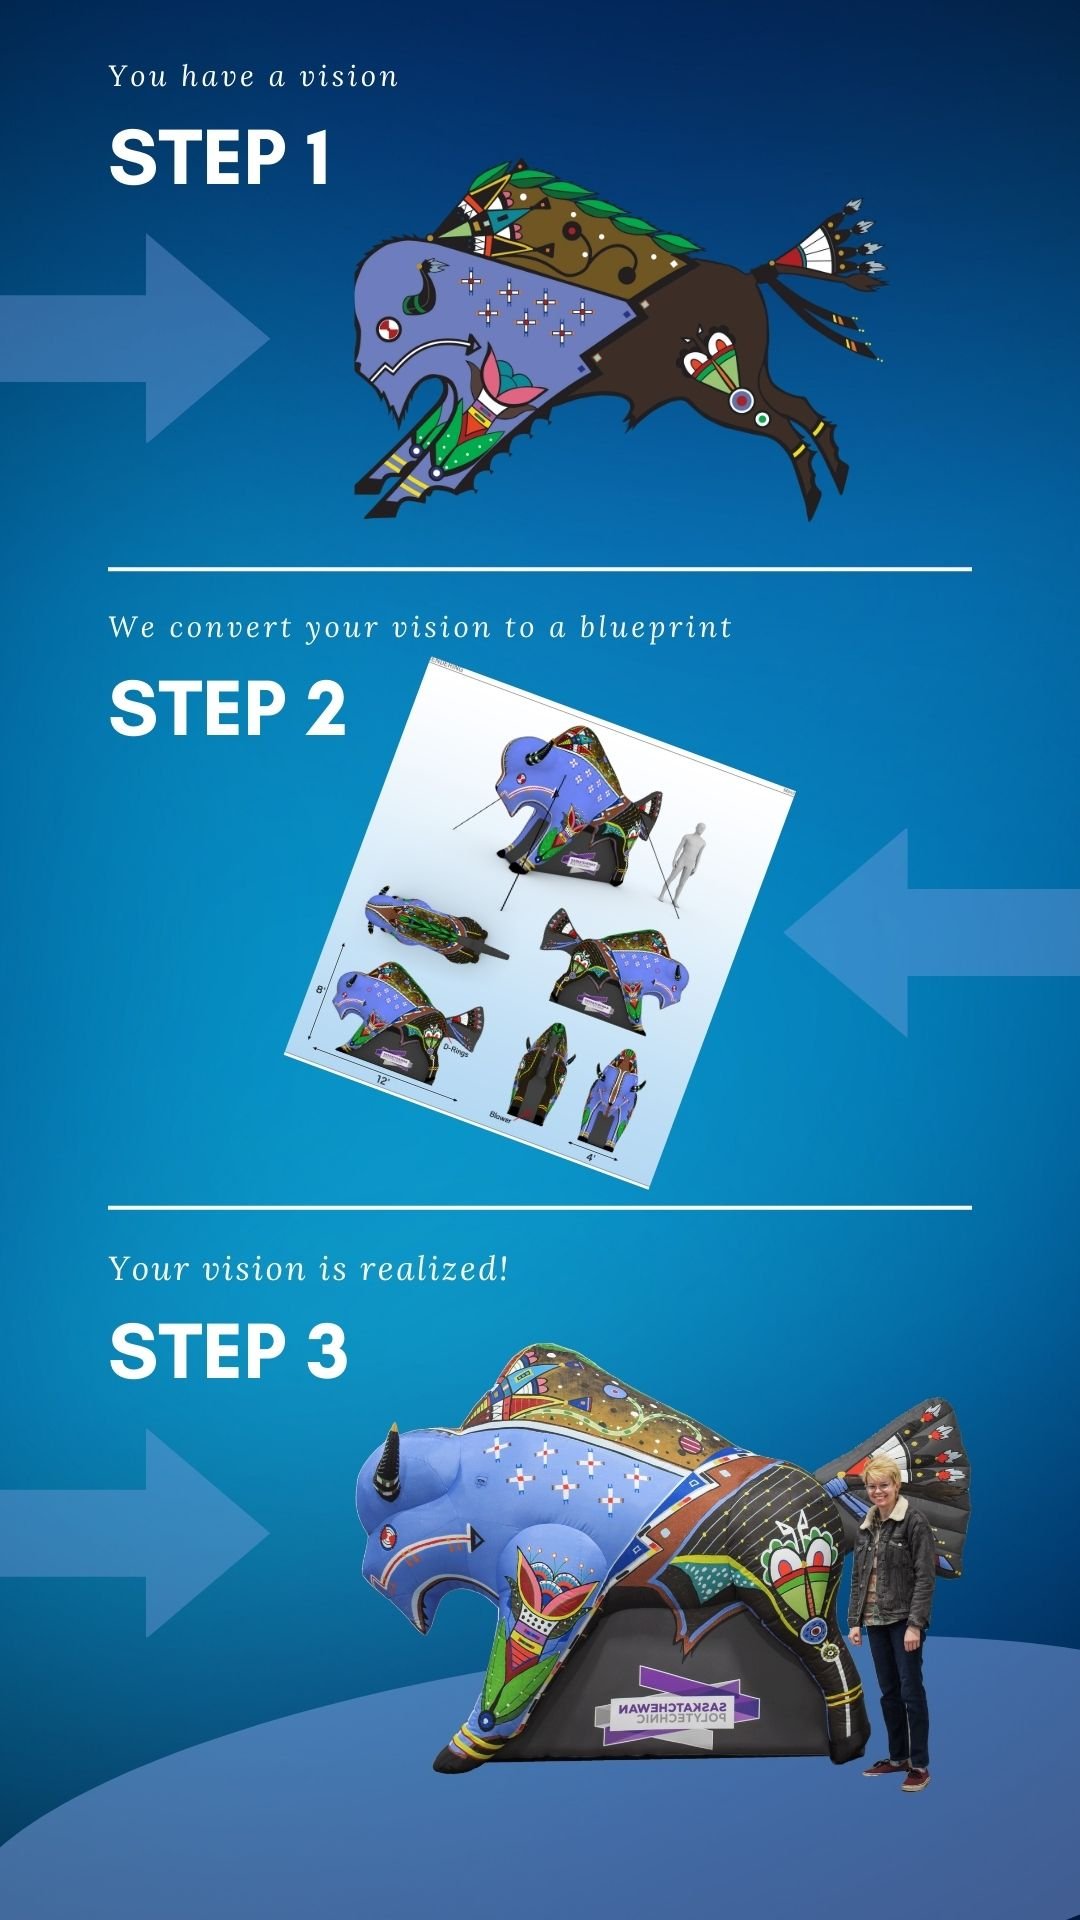 Order in 3 easy steps